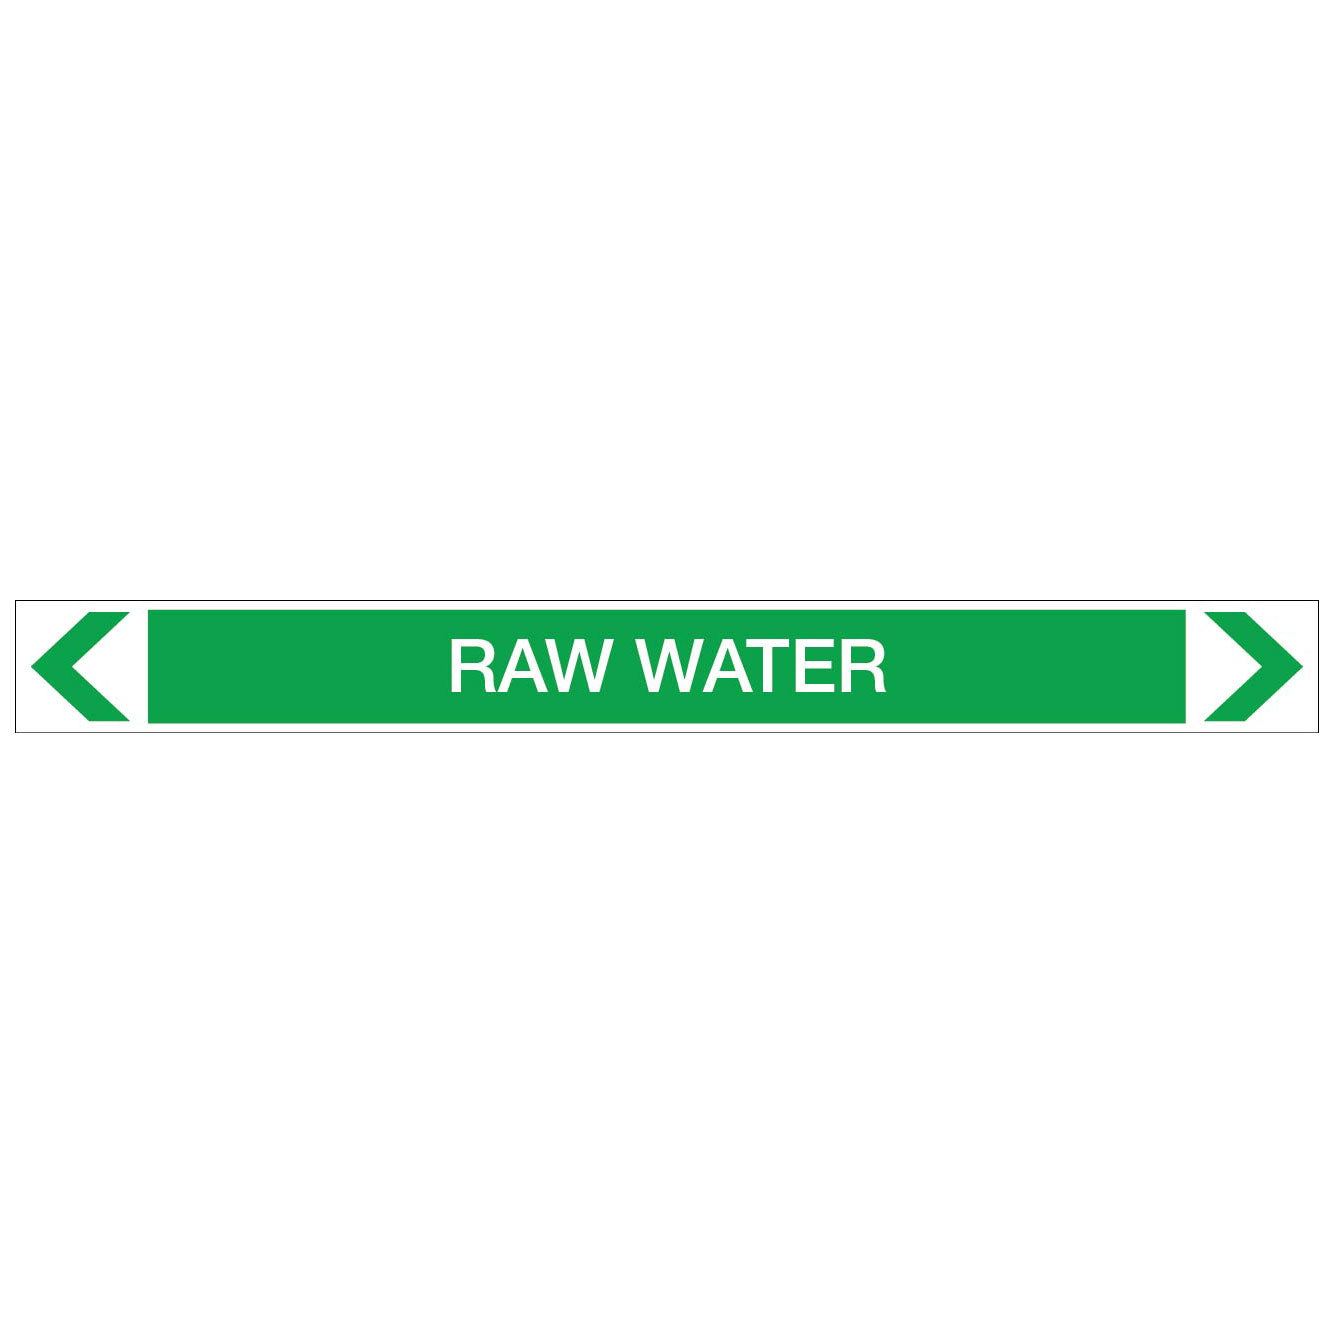 Water - Raw Water - Pipe Marker Sticker